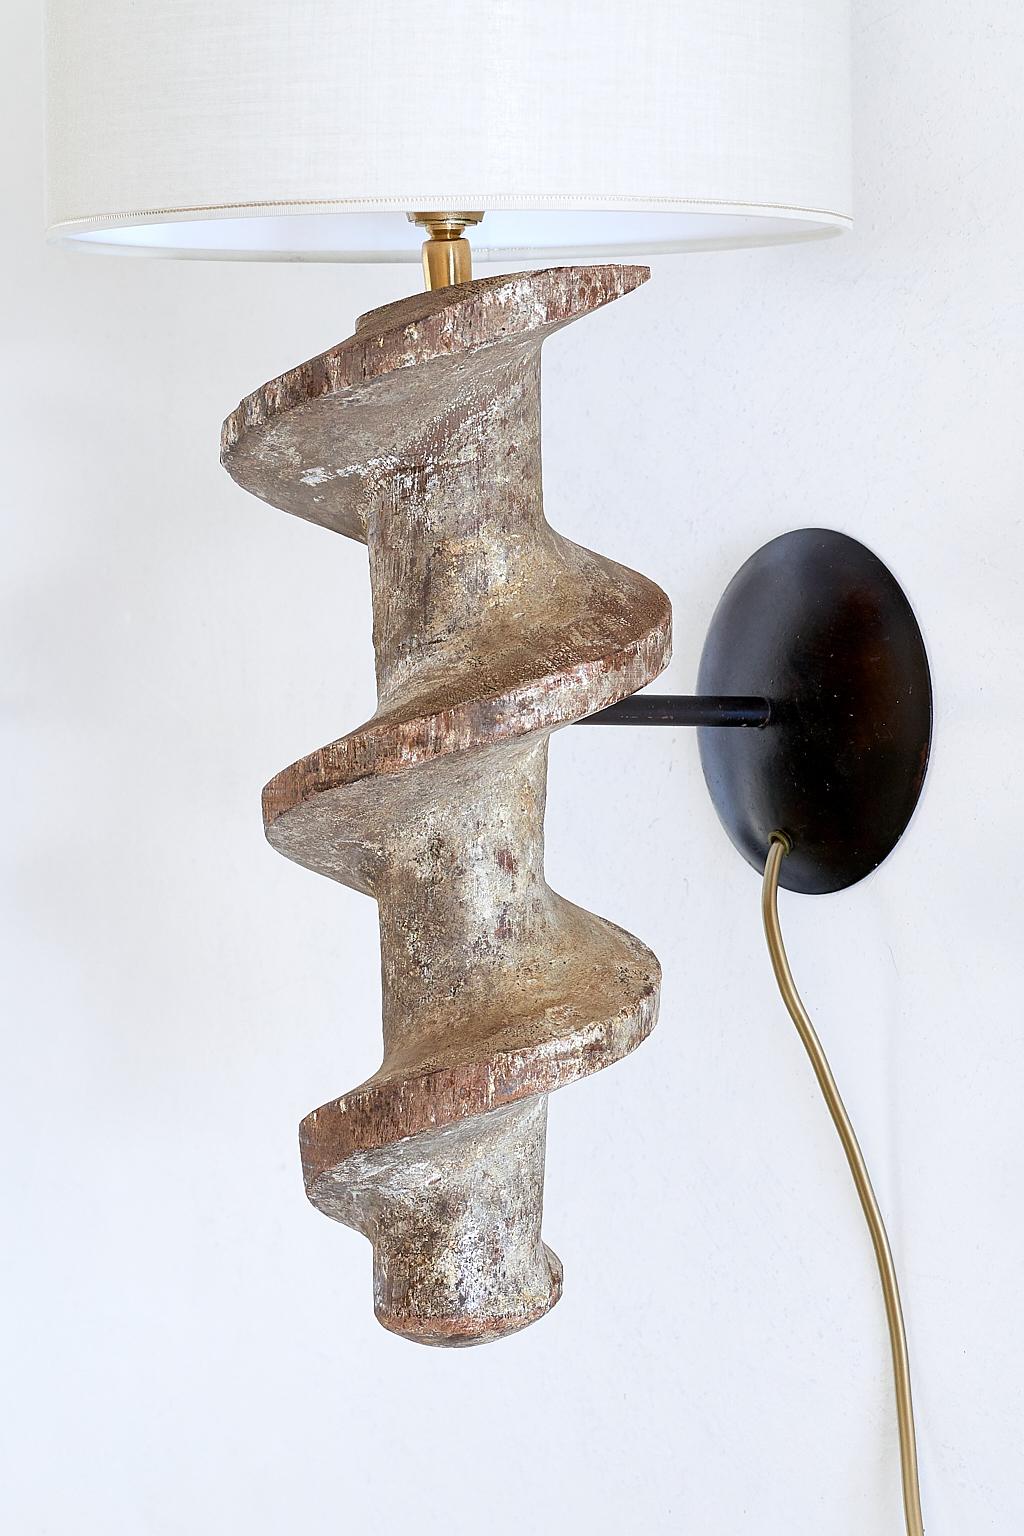 Sculptural Pair of Spiral Screw Wall Lamps in Hardwood, Belgium, 19th Century 2